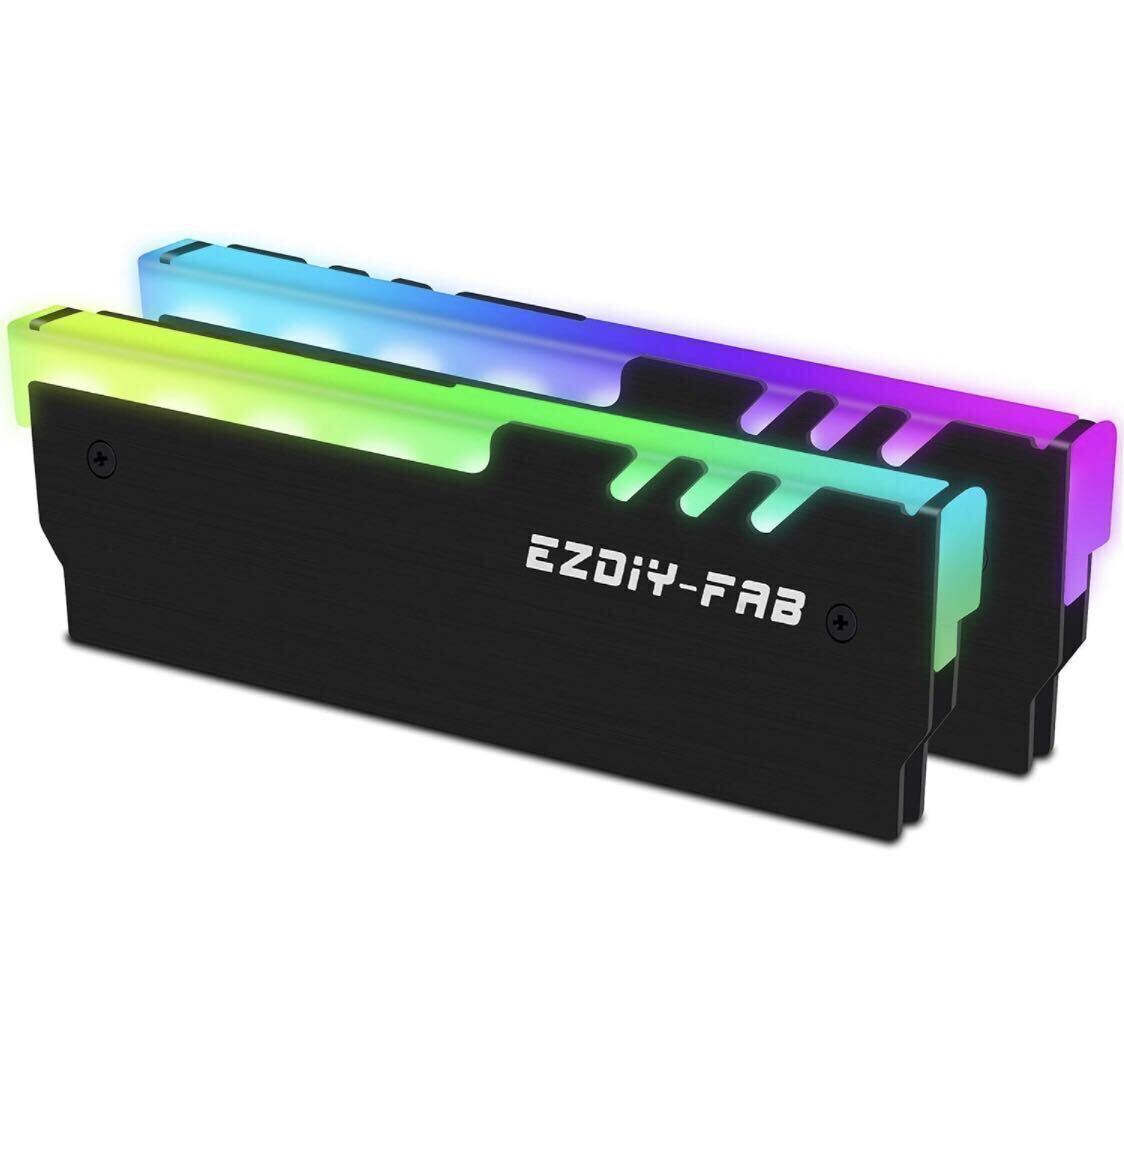 [ used ]Crucial desk top memory DDR4 3200MHz (8GB 2 sheets set total 16GB) + EZDIY-FAB RAM cooling ARGB memory heat sink 